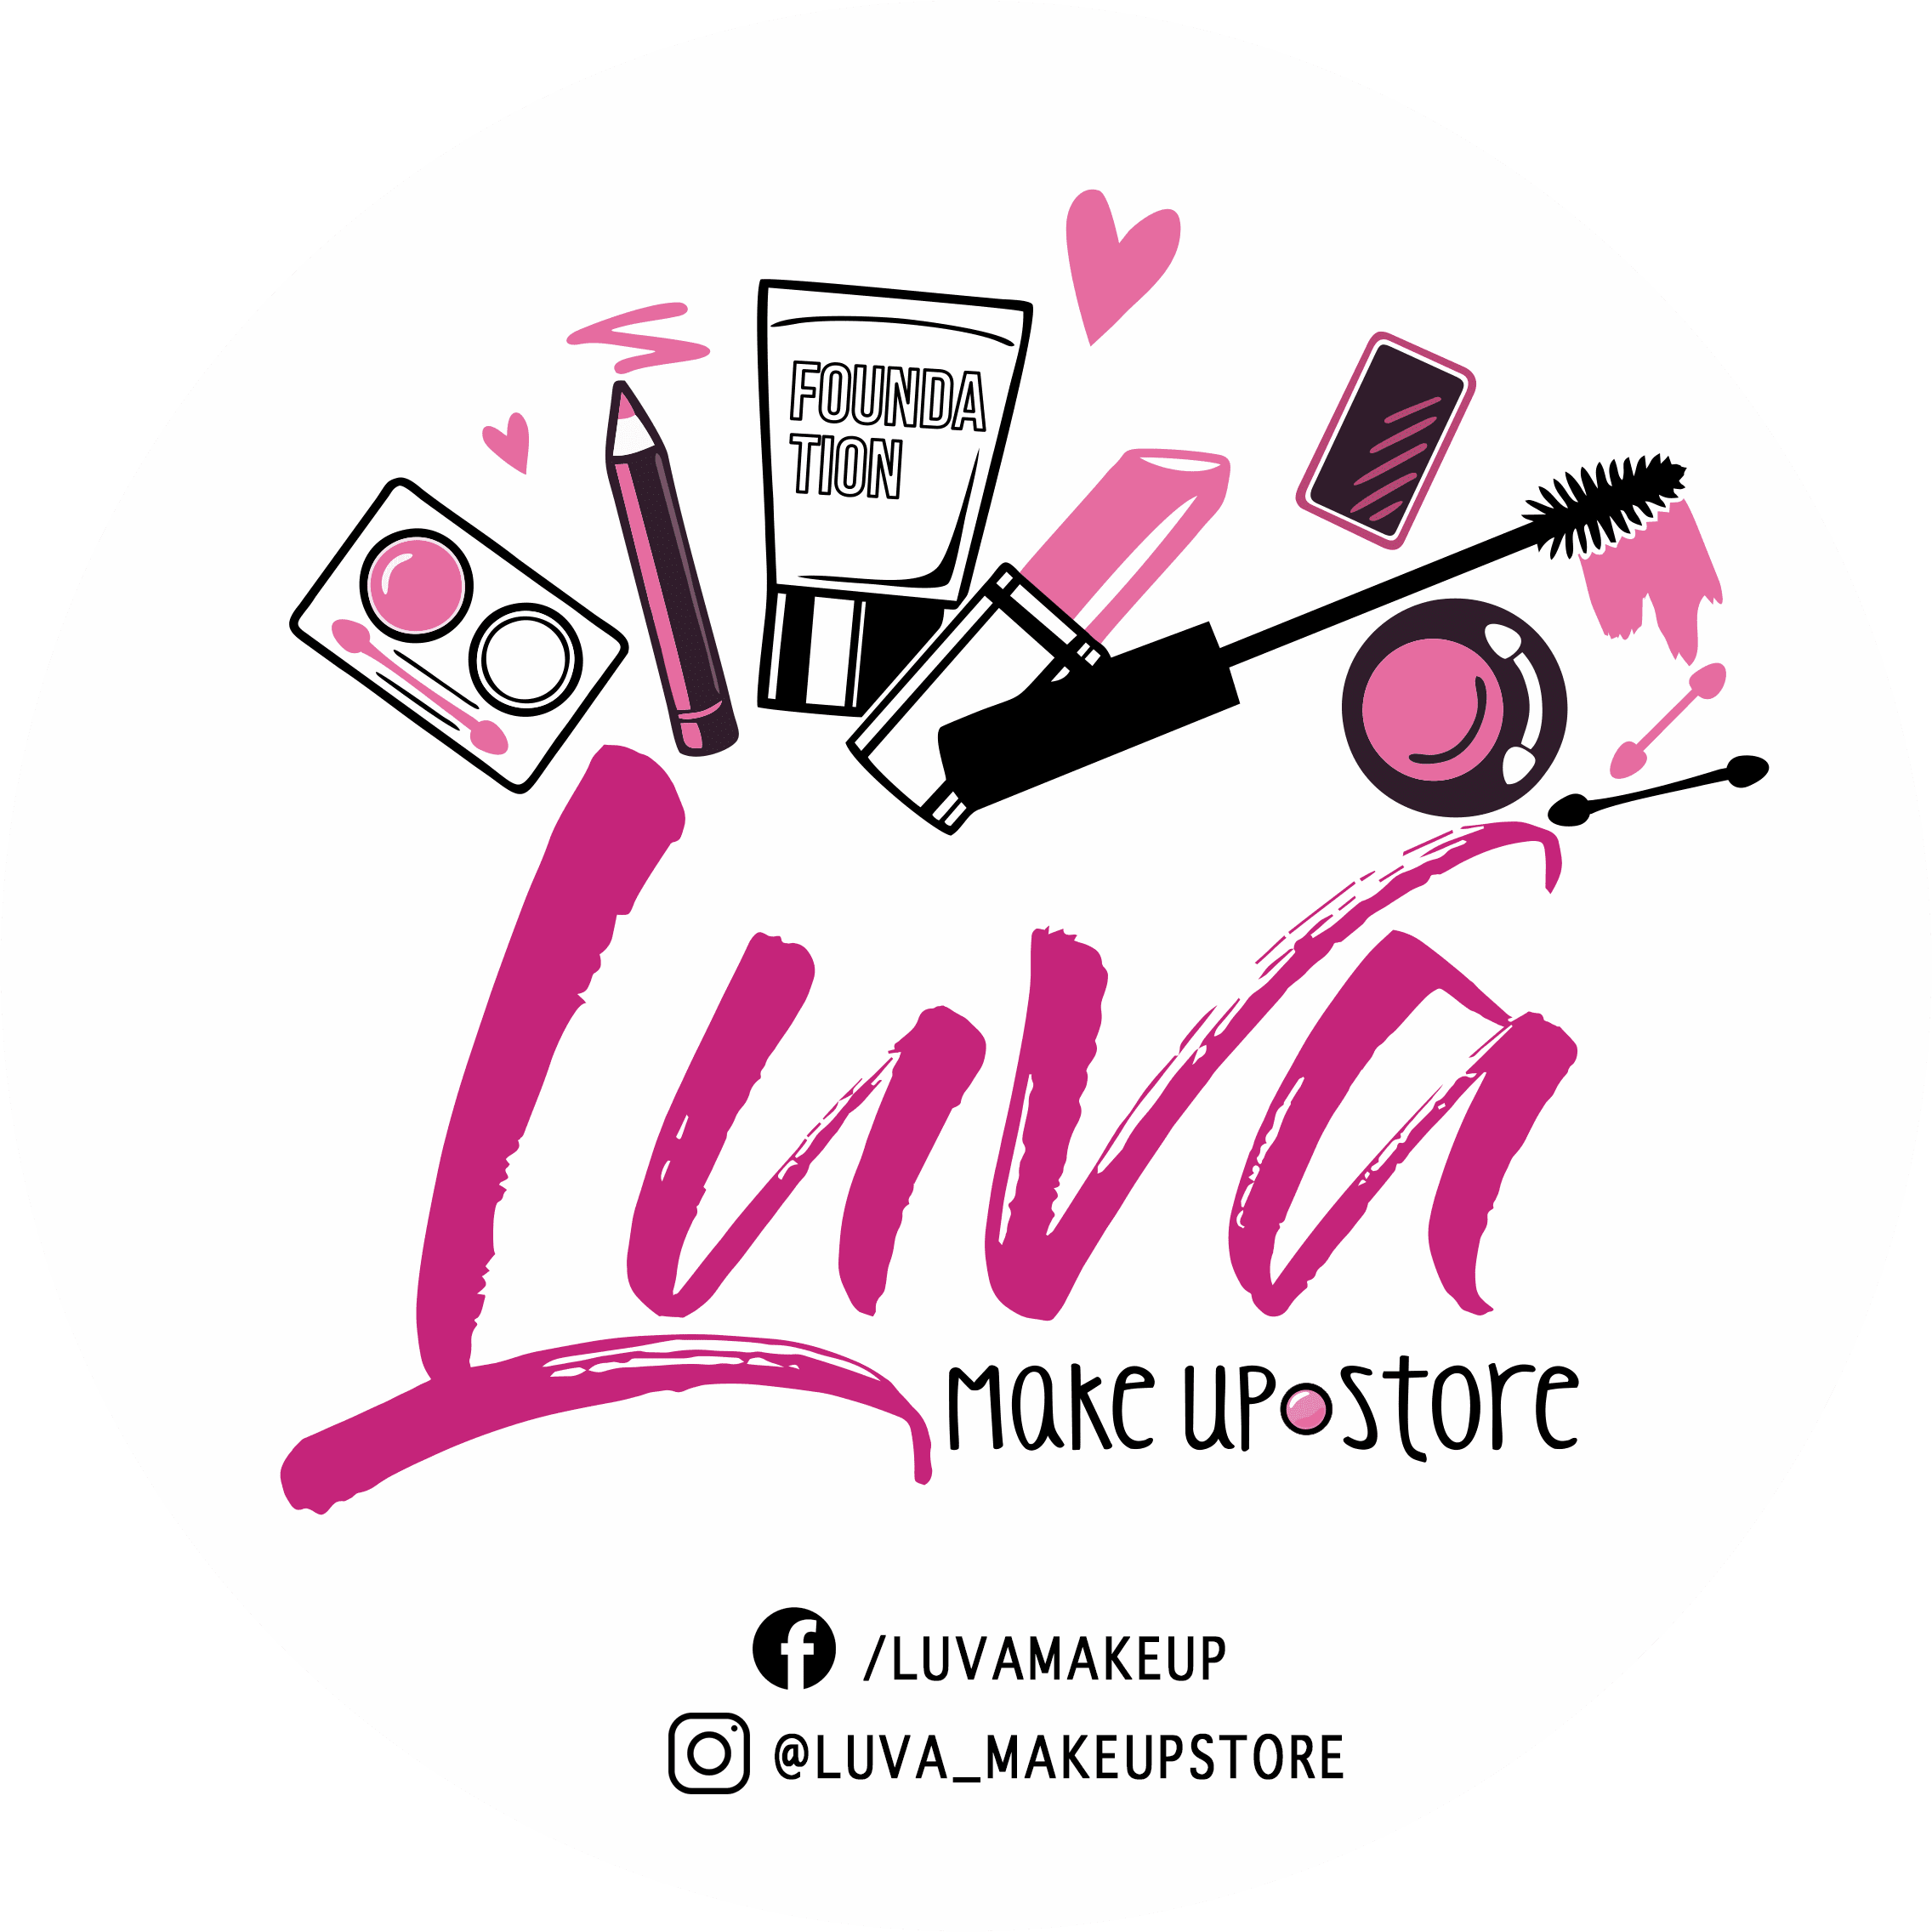 Luva Makeup Store